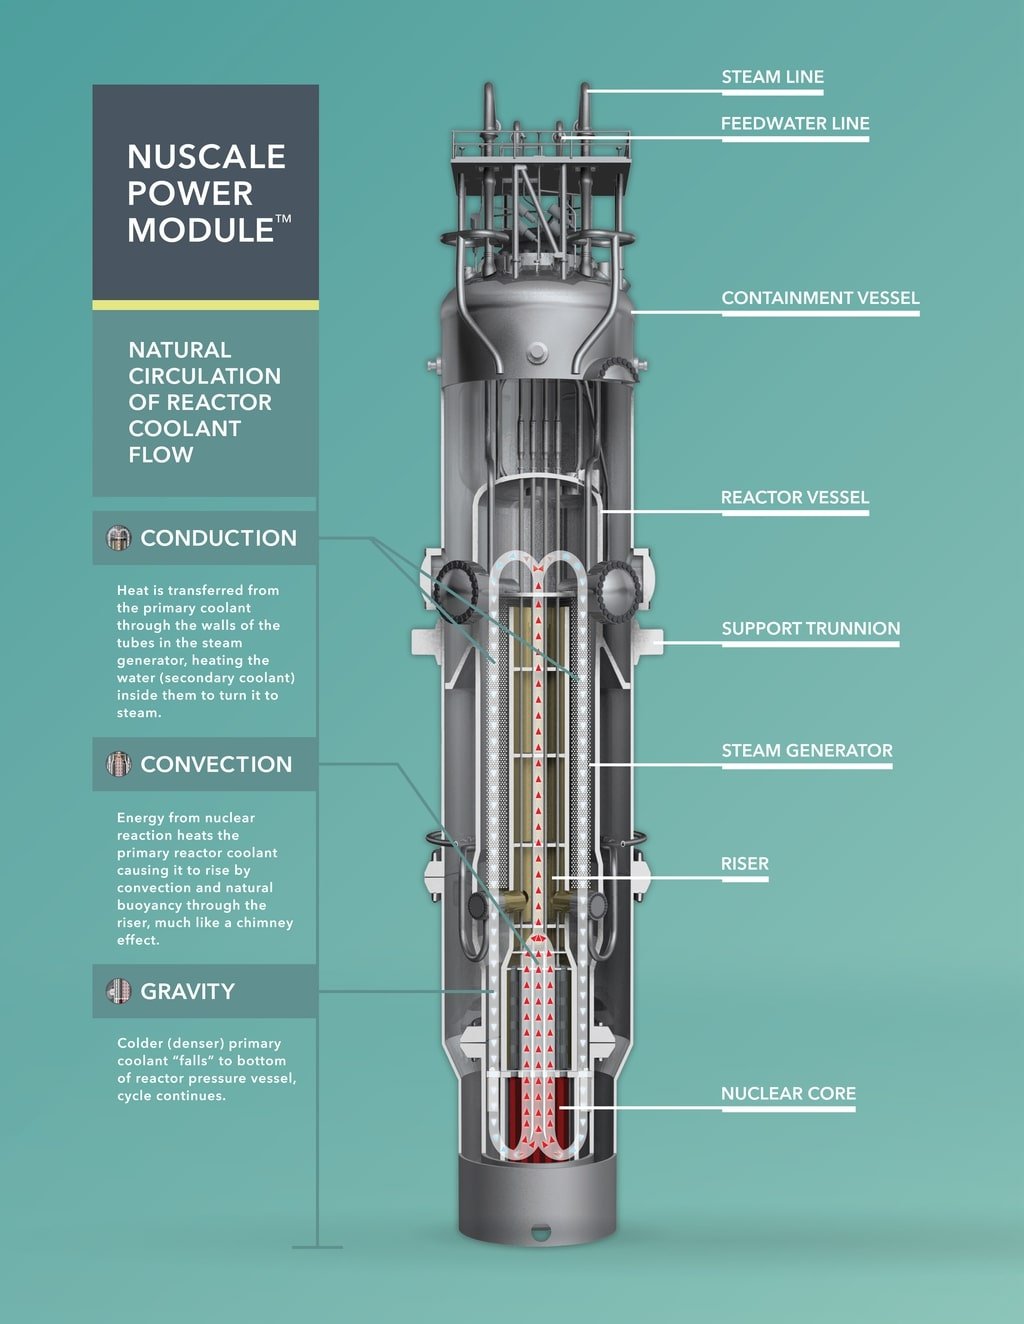 image Estonian firm to build modular nuclear reactor; major step towards becoming carbon neutral